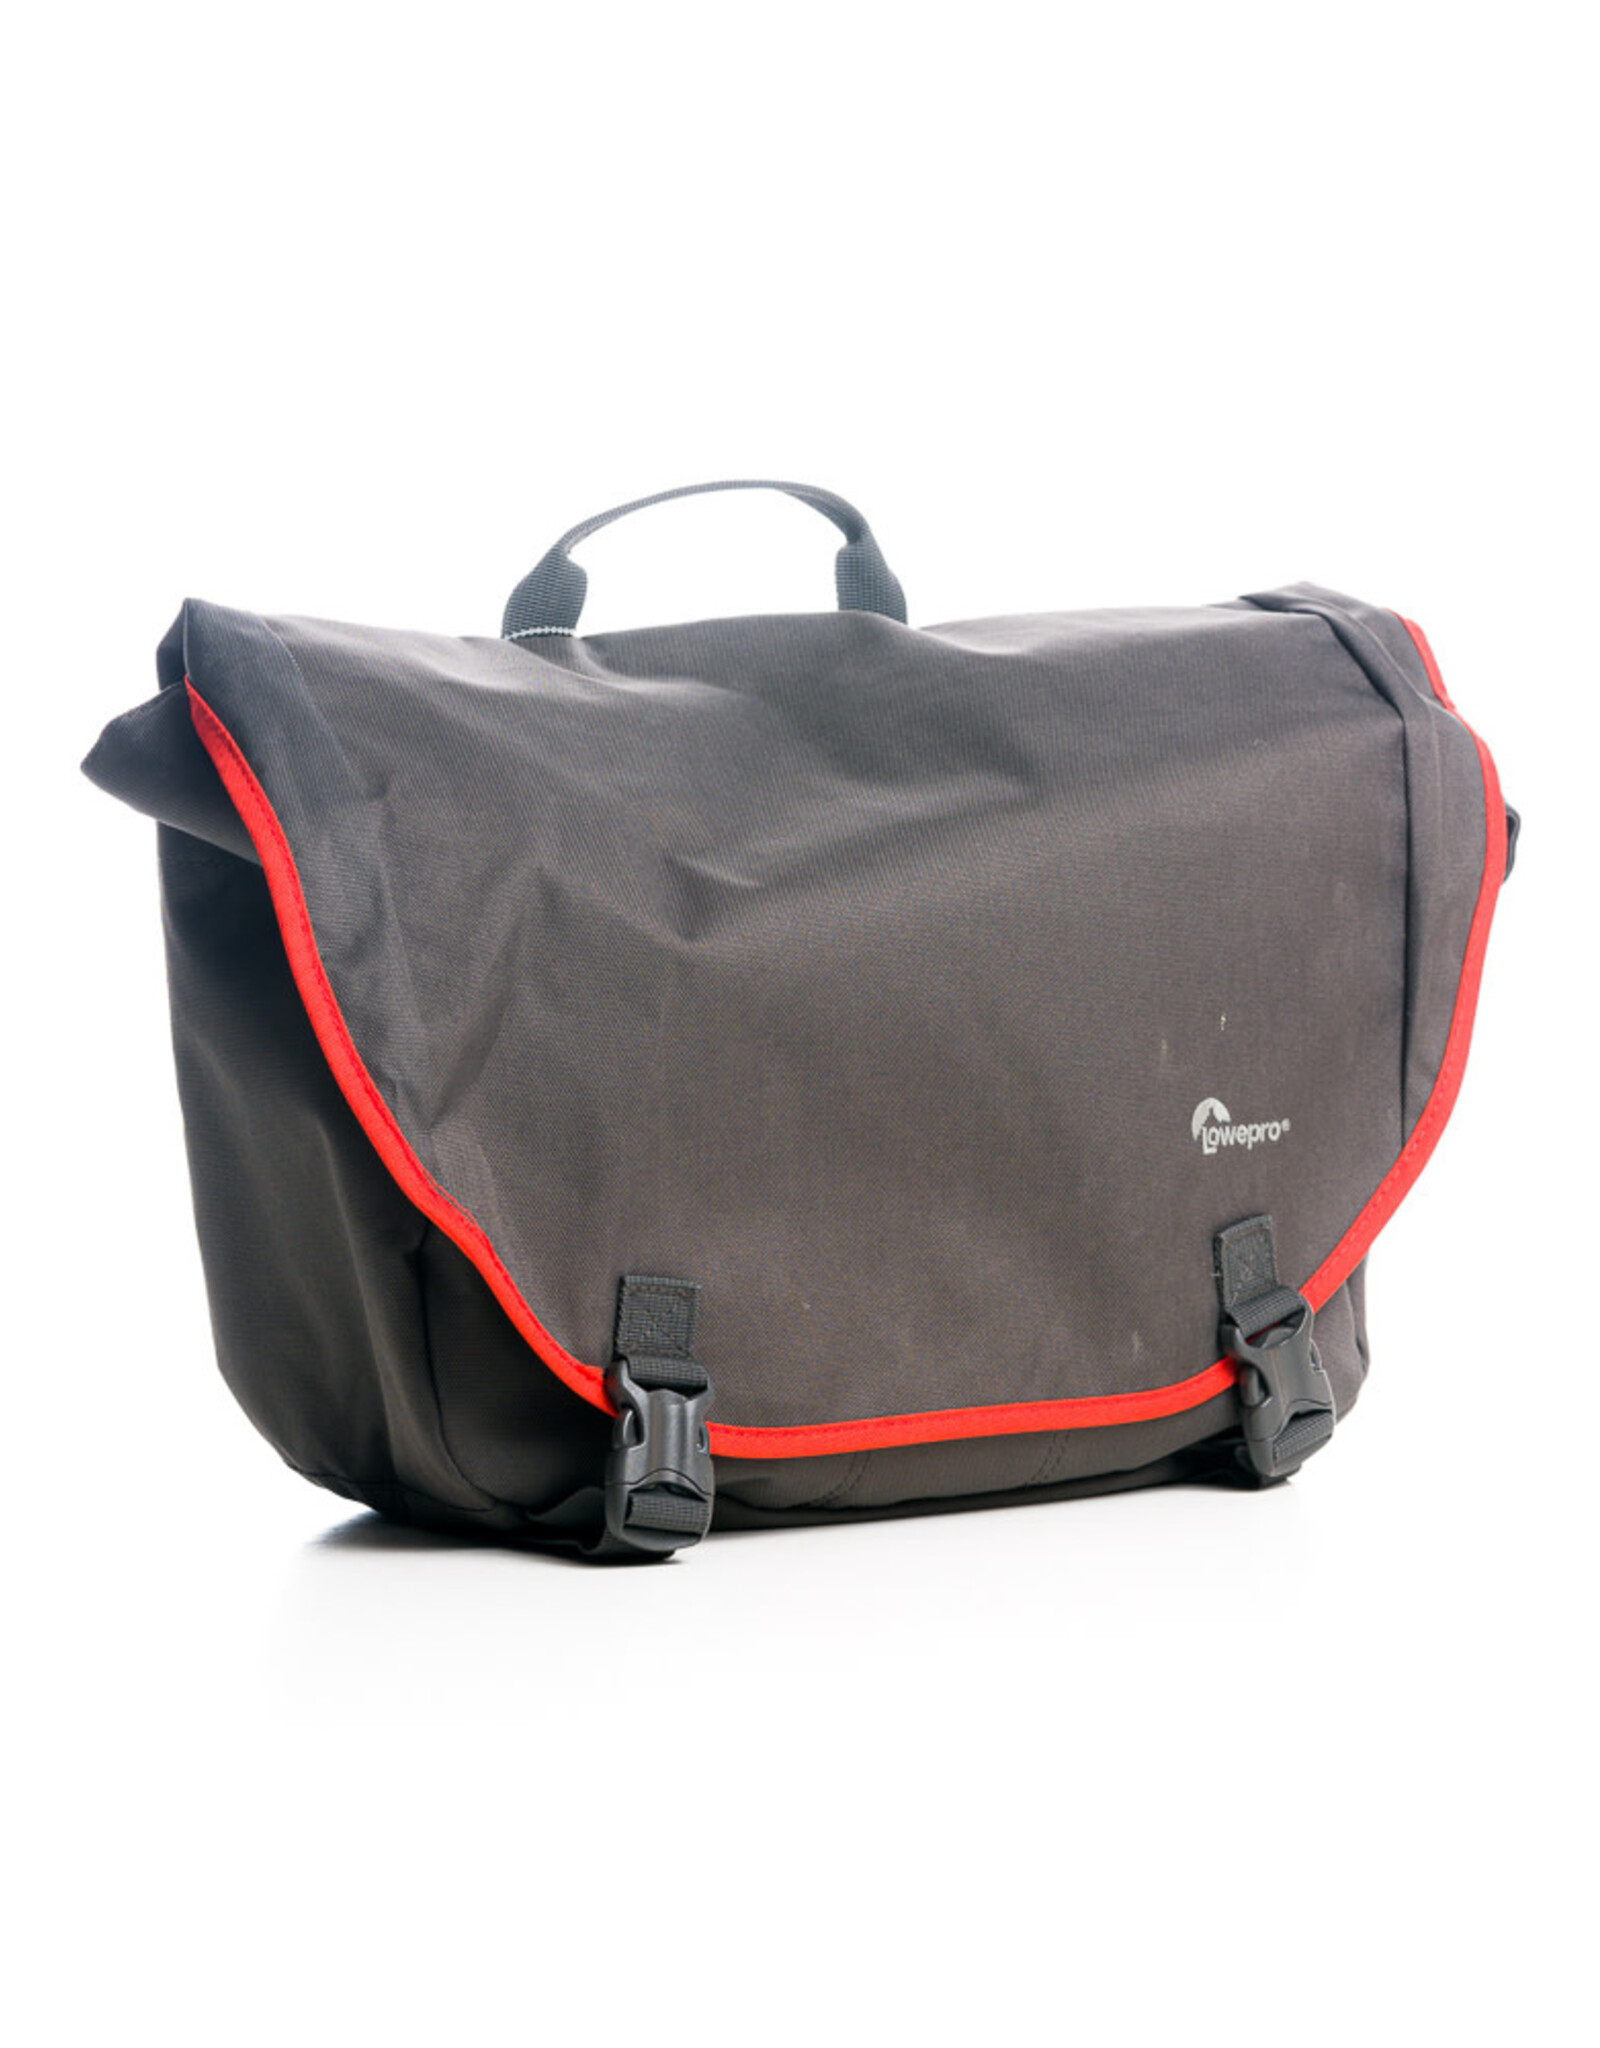 LowePro Lowepro Passport Messenger Shoulder Bag (Gray/Orange)